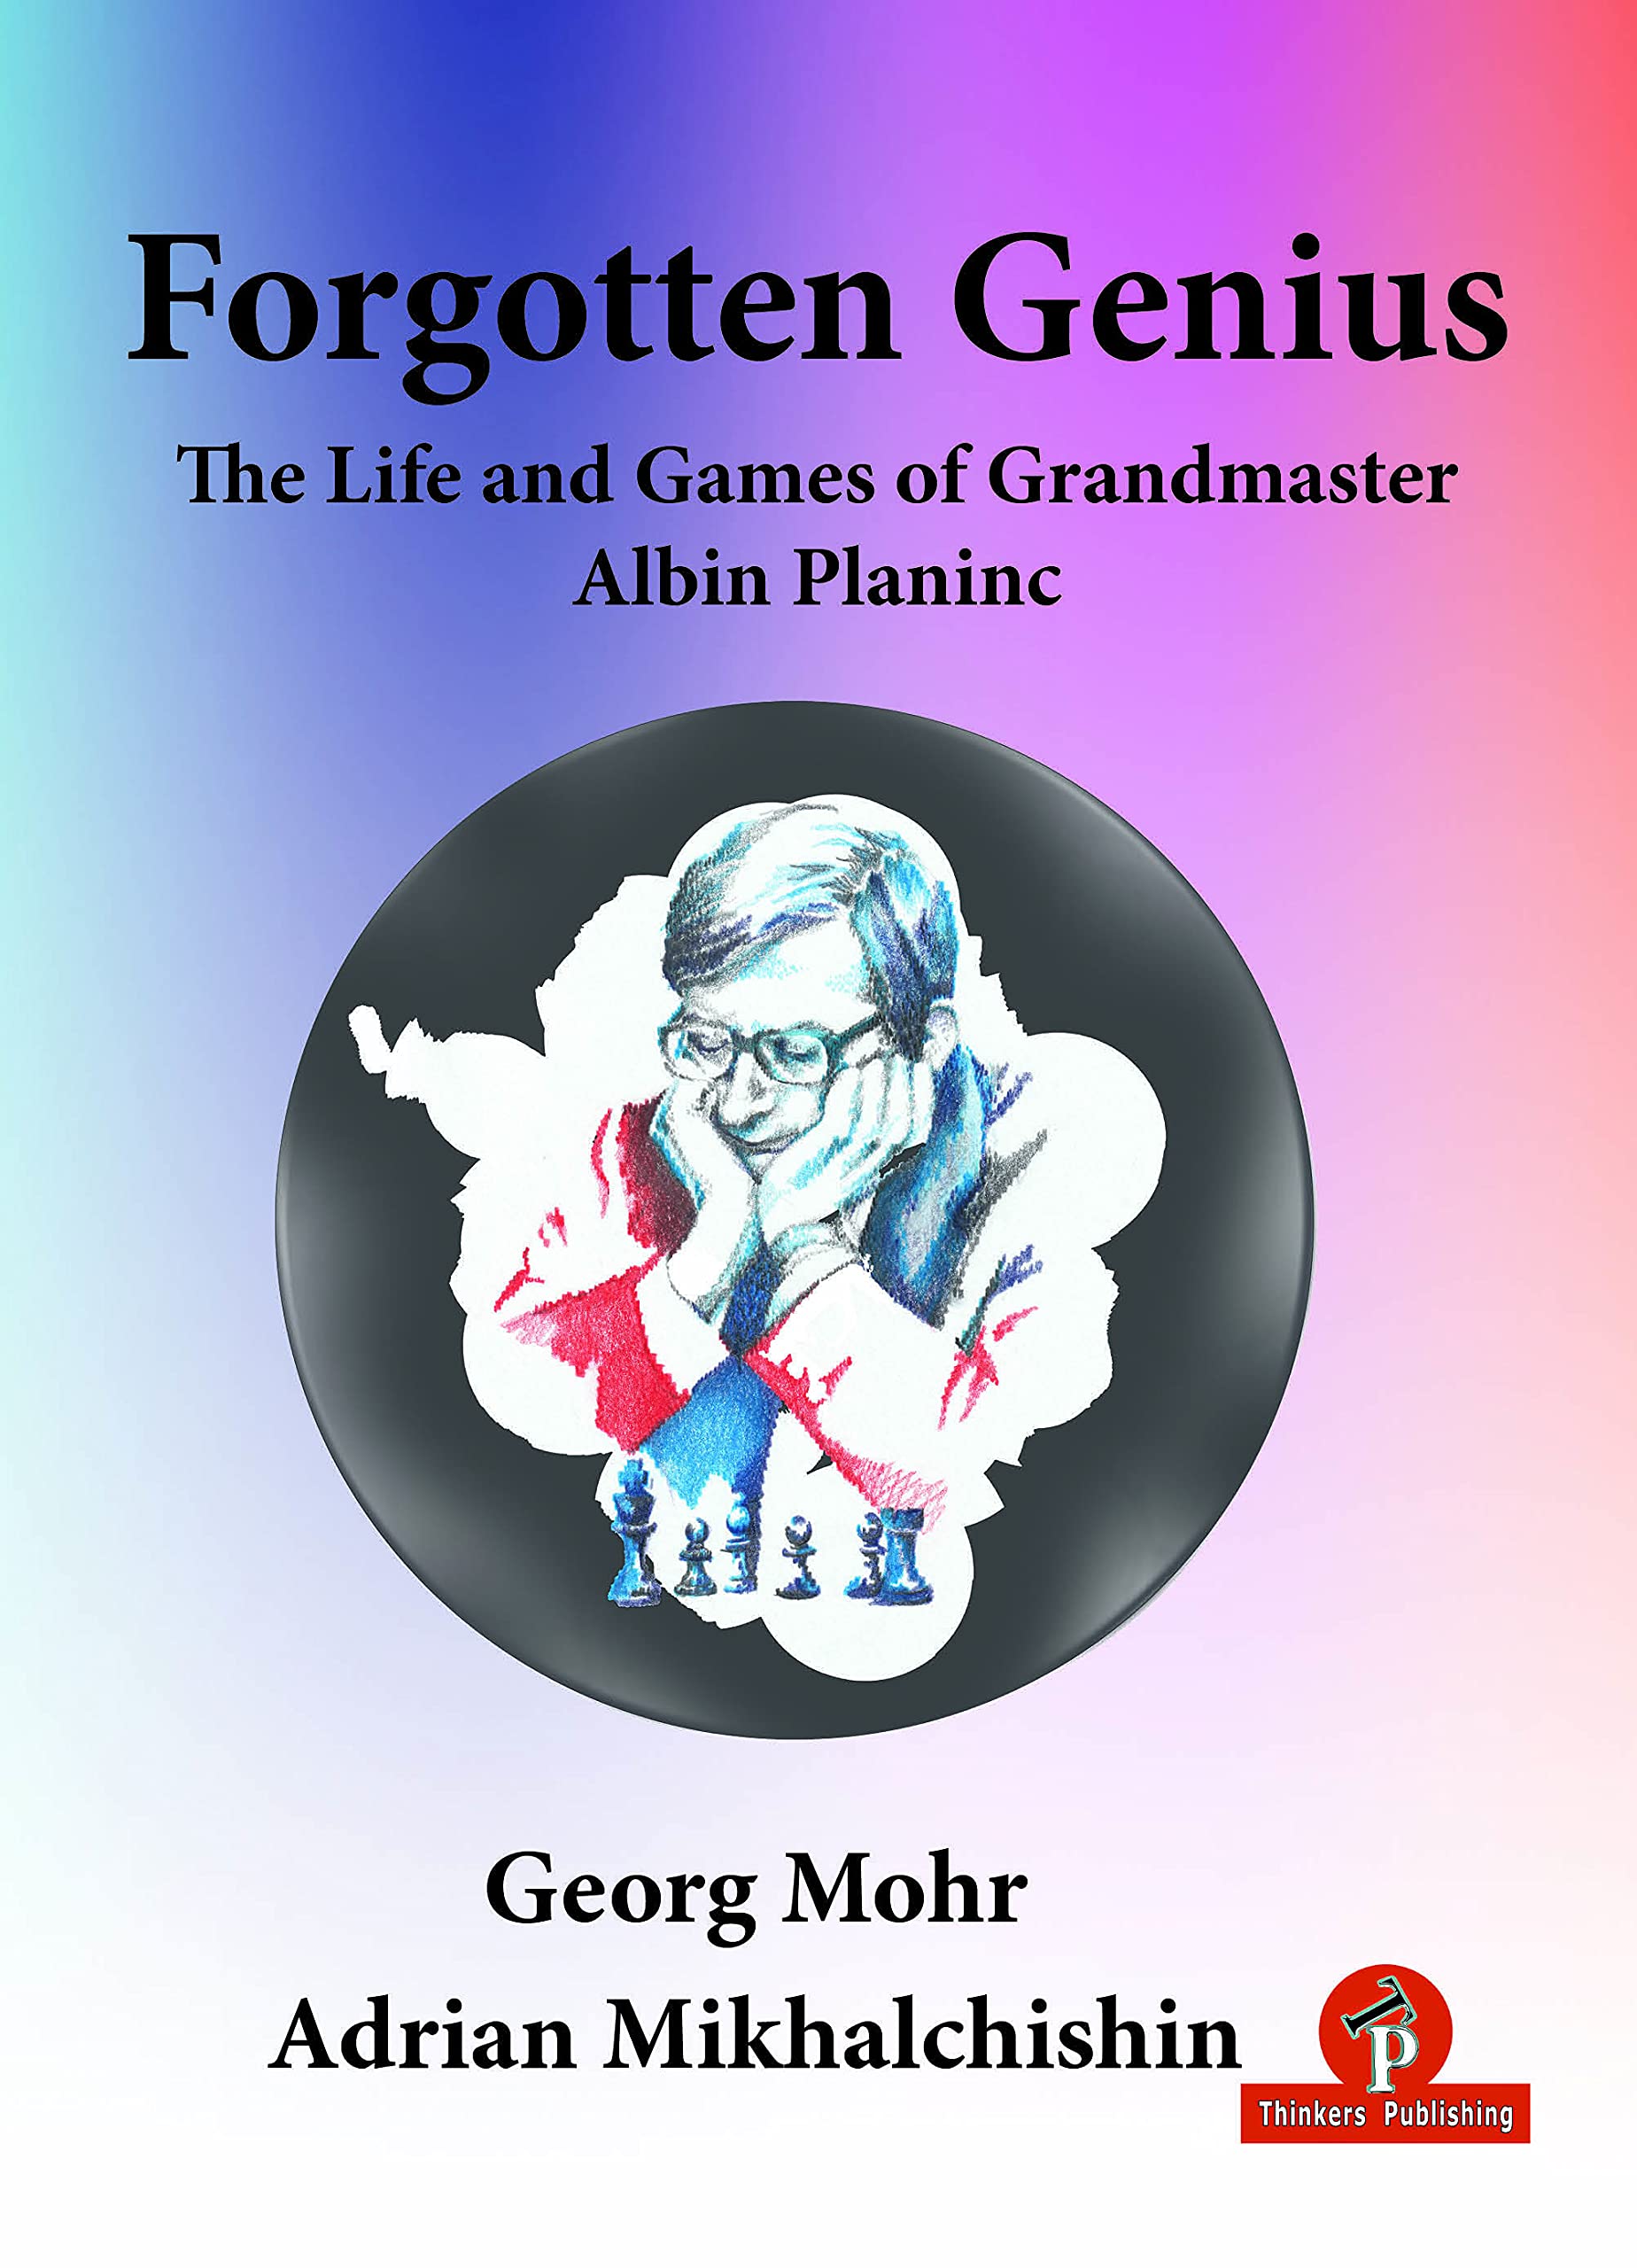 Forgotten Genius - The Life and Games of Grandmaster Albin Planinc, Georg Mohr & Adrian Mikhalchishin, Thinker's Publishing, 20th September 2021, ISBN-13 ‏ : ‎ 978-9464201291 